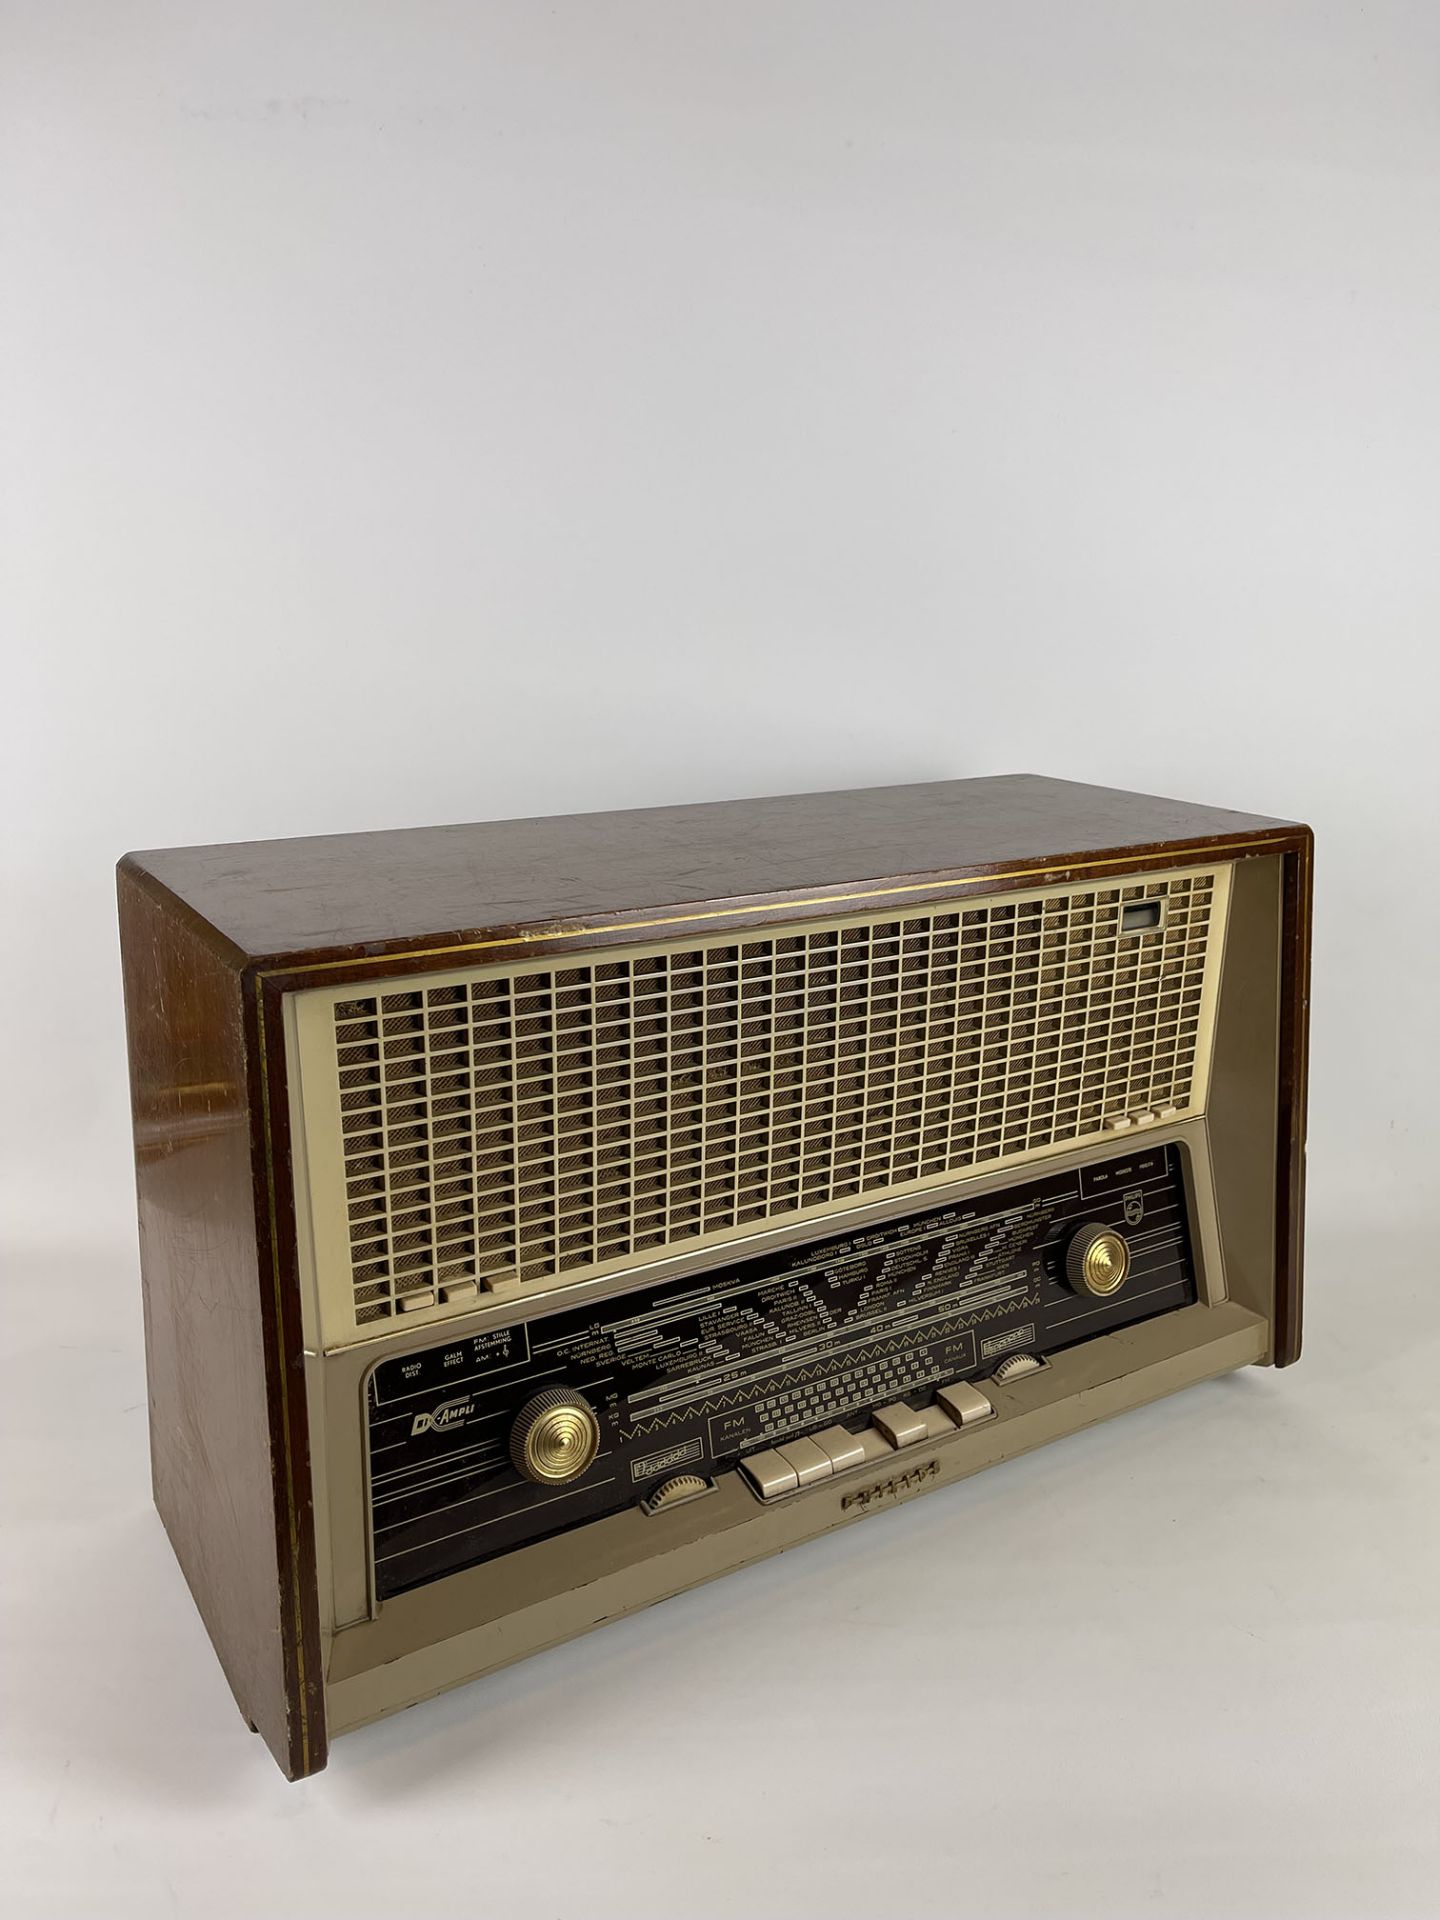 Philips B6X92A Radio, 1959-1960, Netherlands - Image 6 of 8